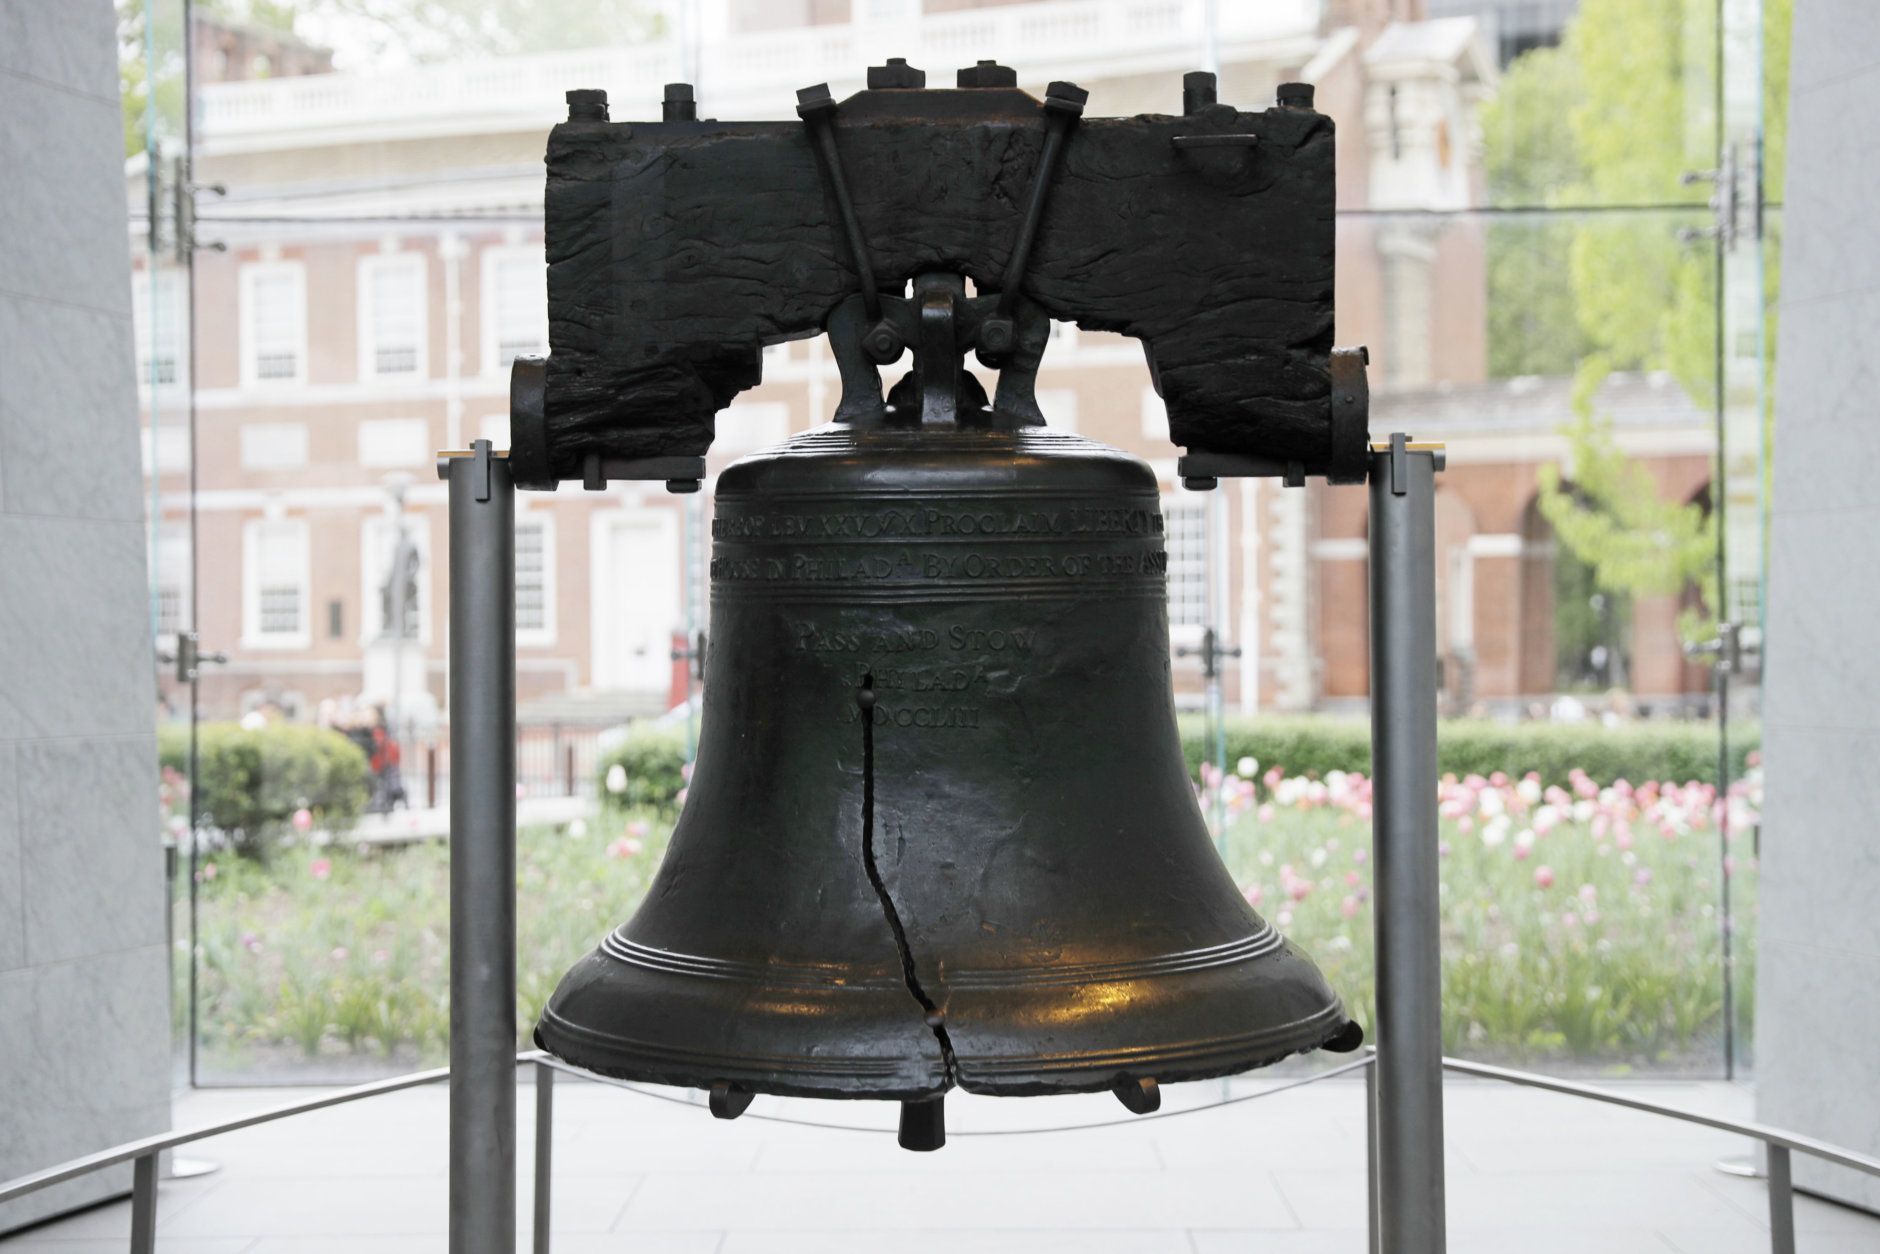 Shown is the Liberty Bell on Thursday, May 5, 2016, in Philadelphia. (AP Photo/Matt Rourke)